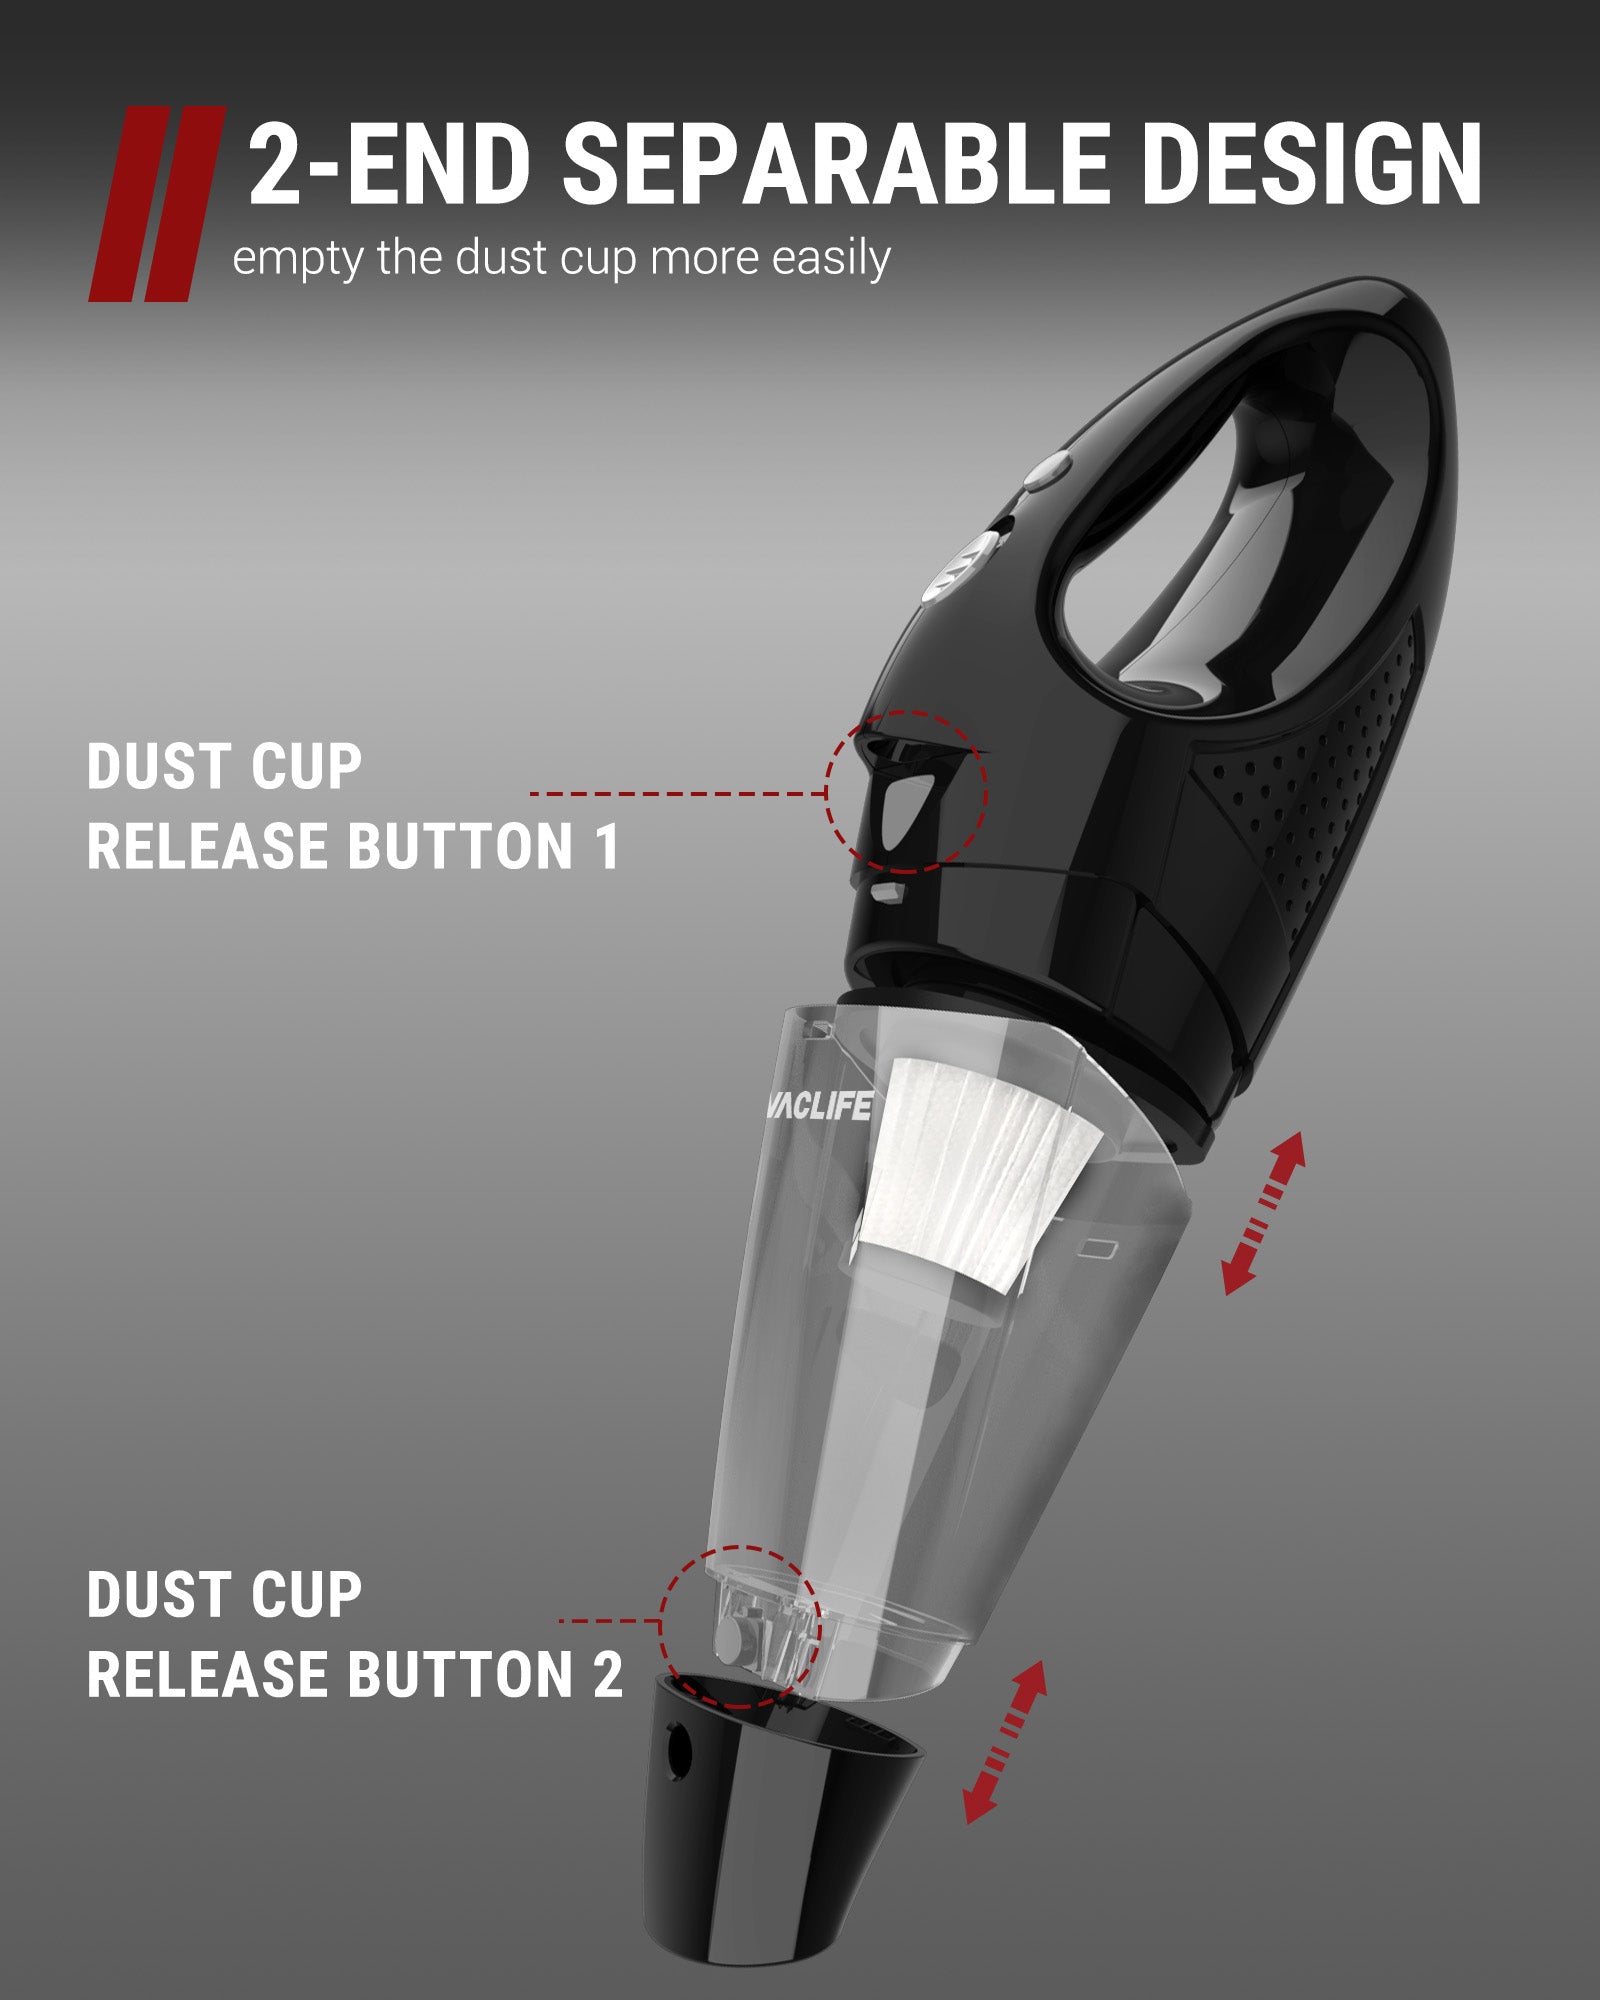 VacLife Handheld Vacuum Cleaner - Car Vacuum Cordless Rechargeable wit